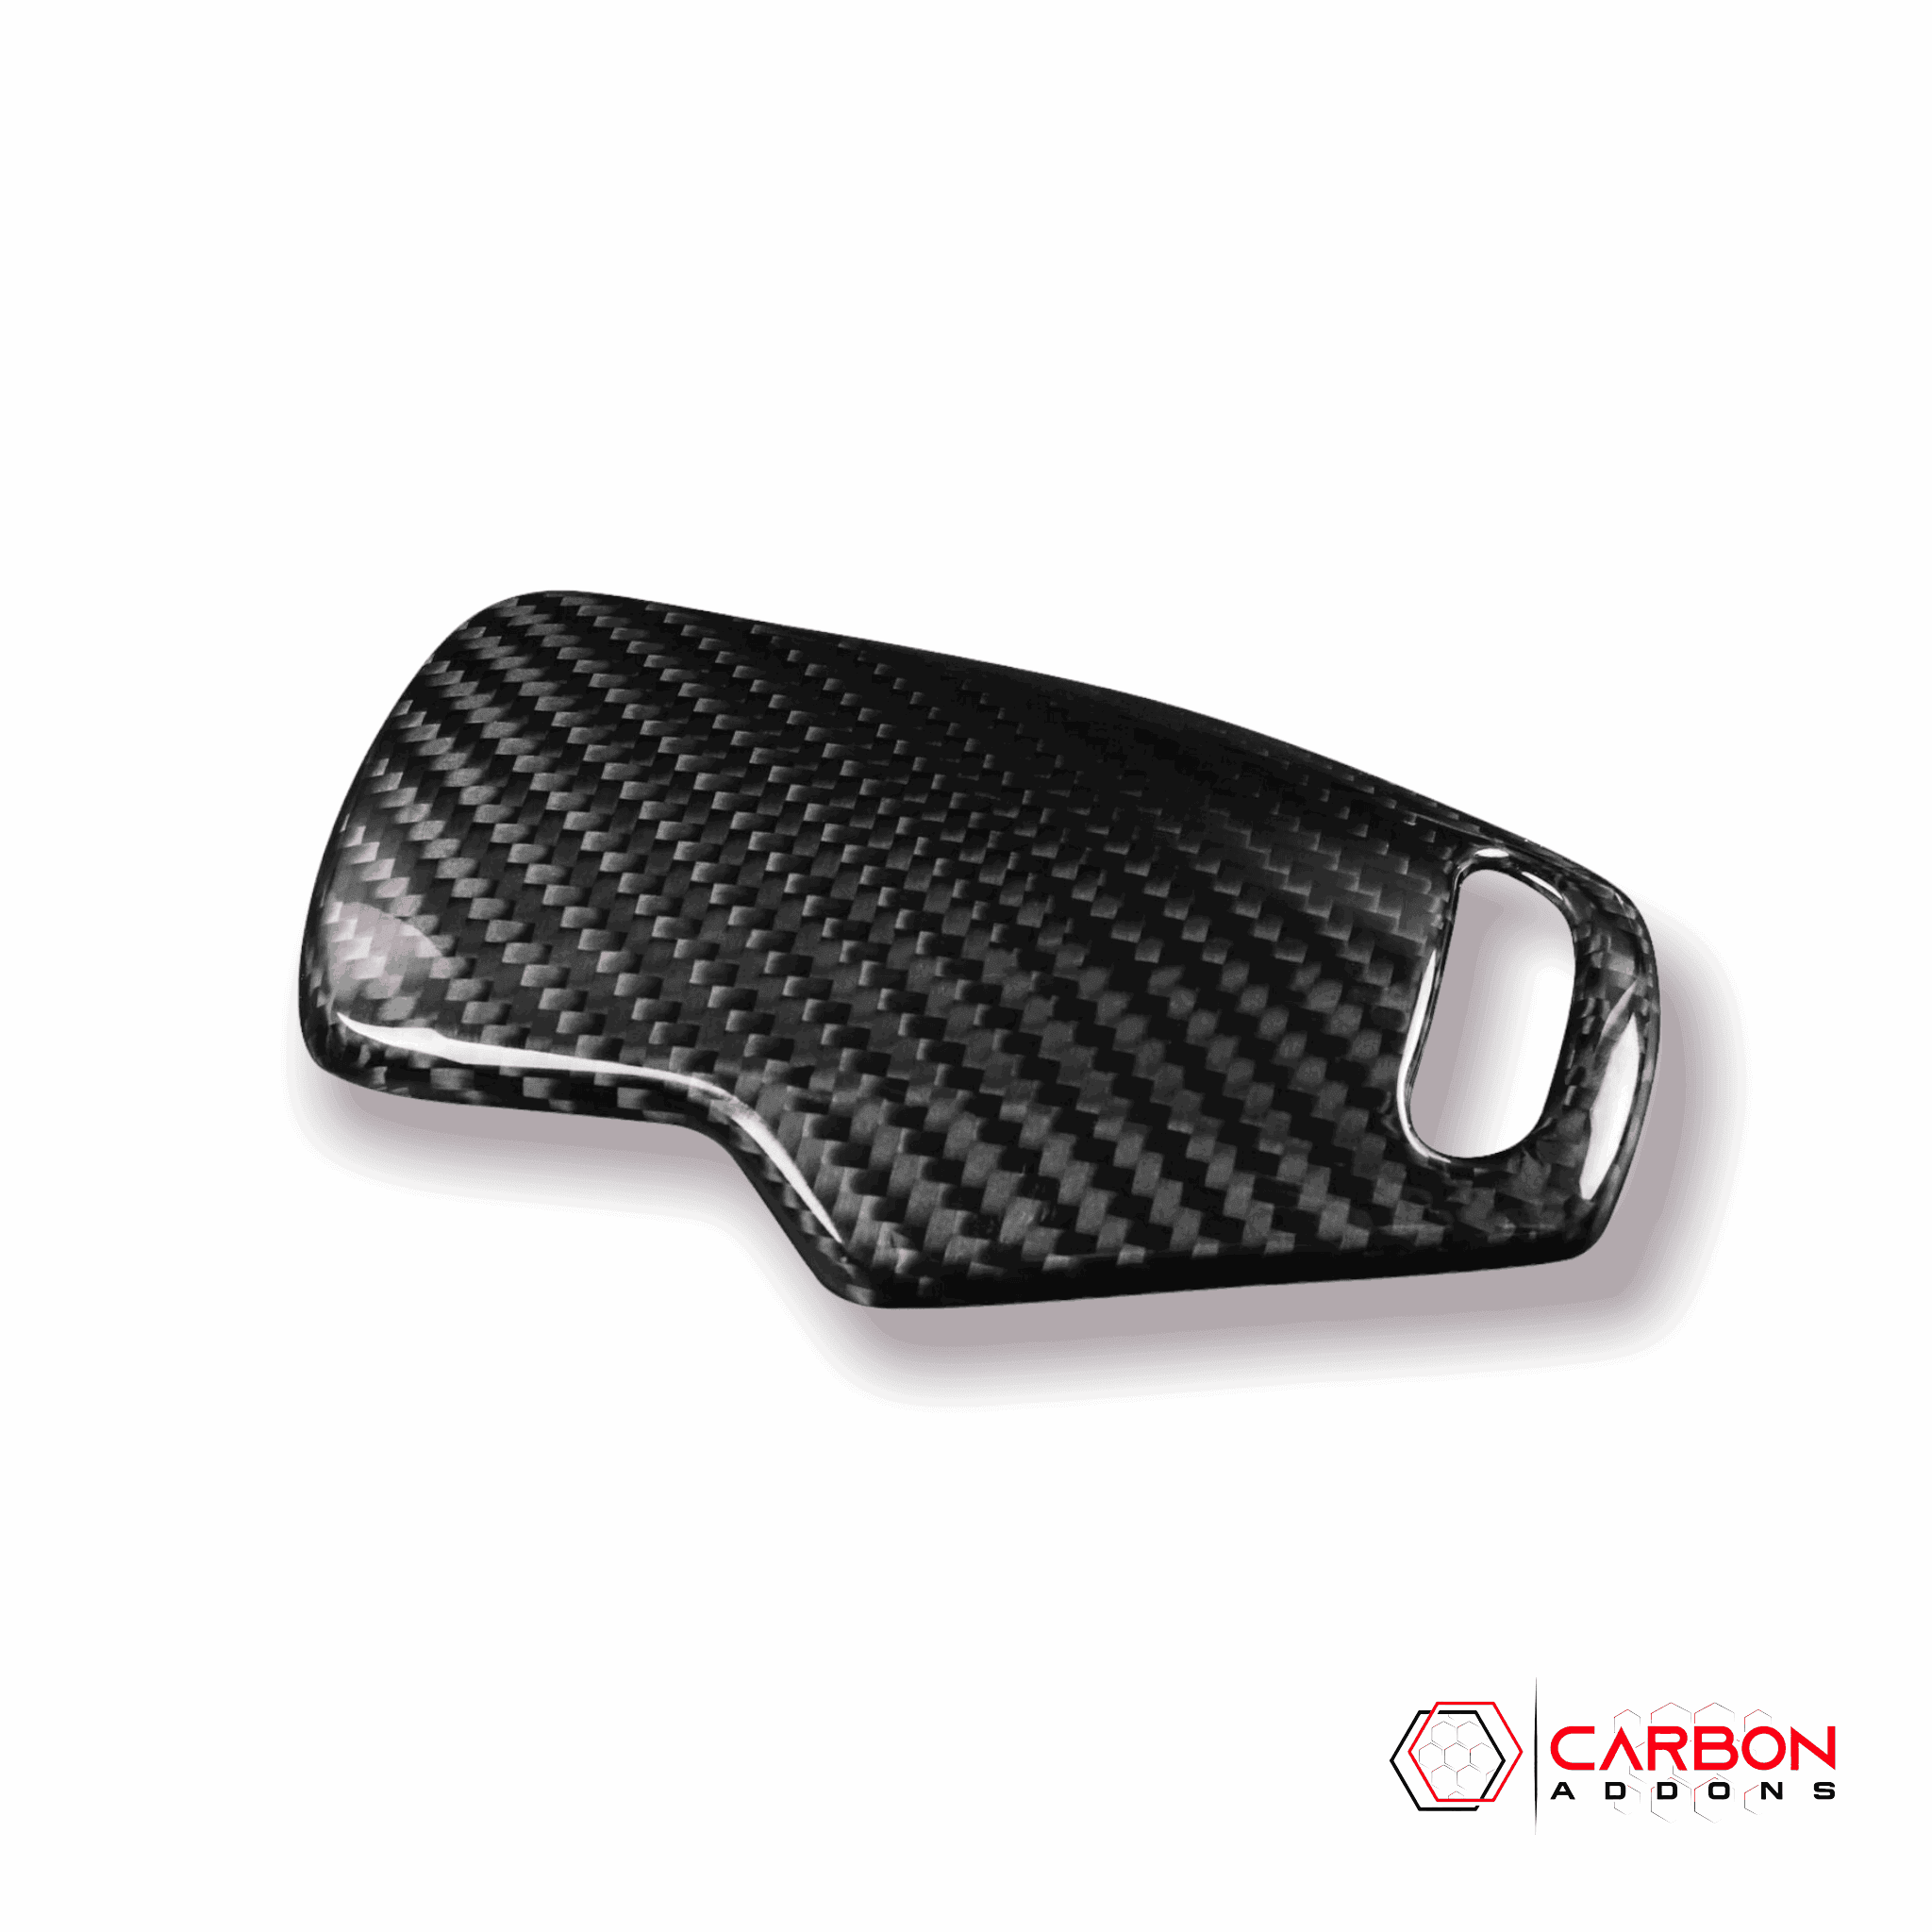 C8 CORVETTE CARBON FIBER MODE SELECT INTERIOR TRIM COVER - carbonaddons Carbon Fiber Parts, Accessories, Upgrades, Mods